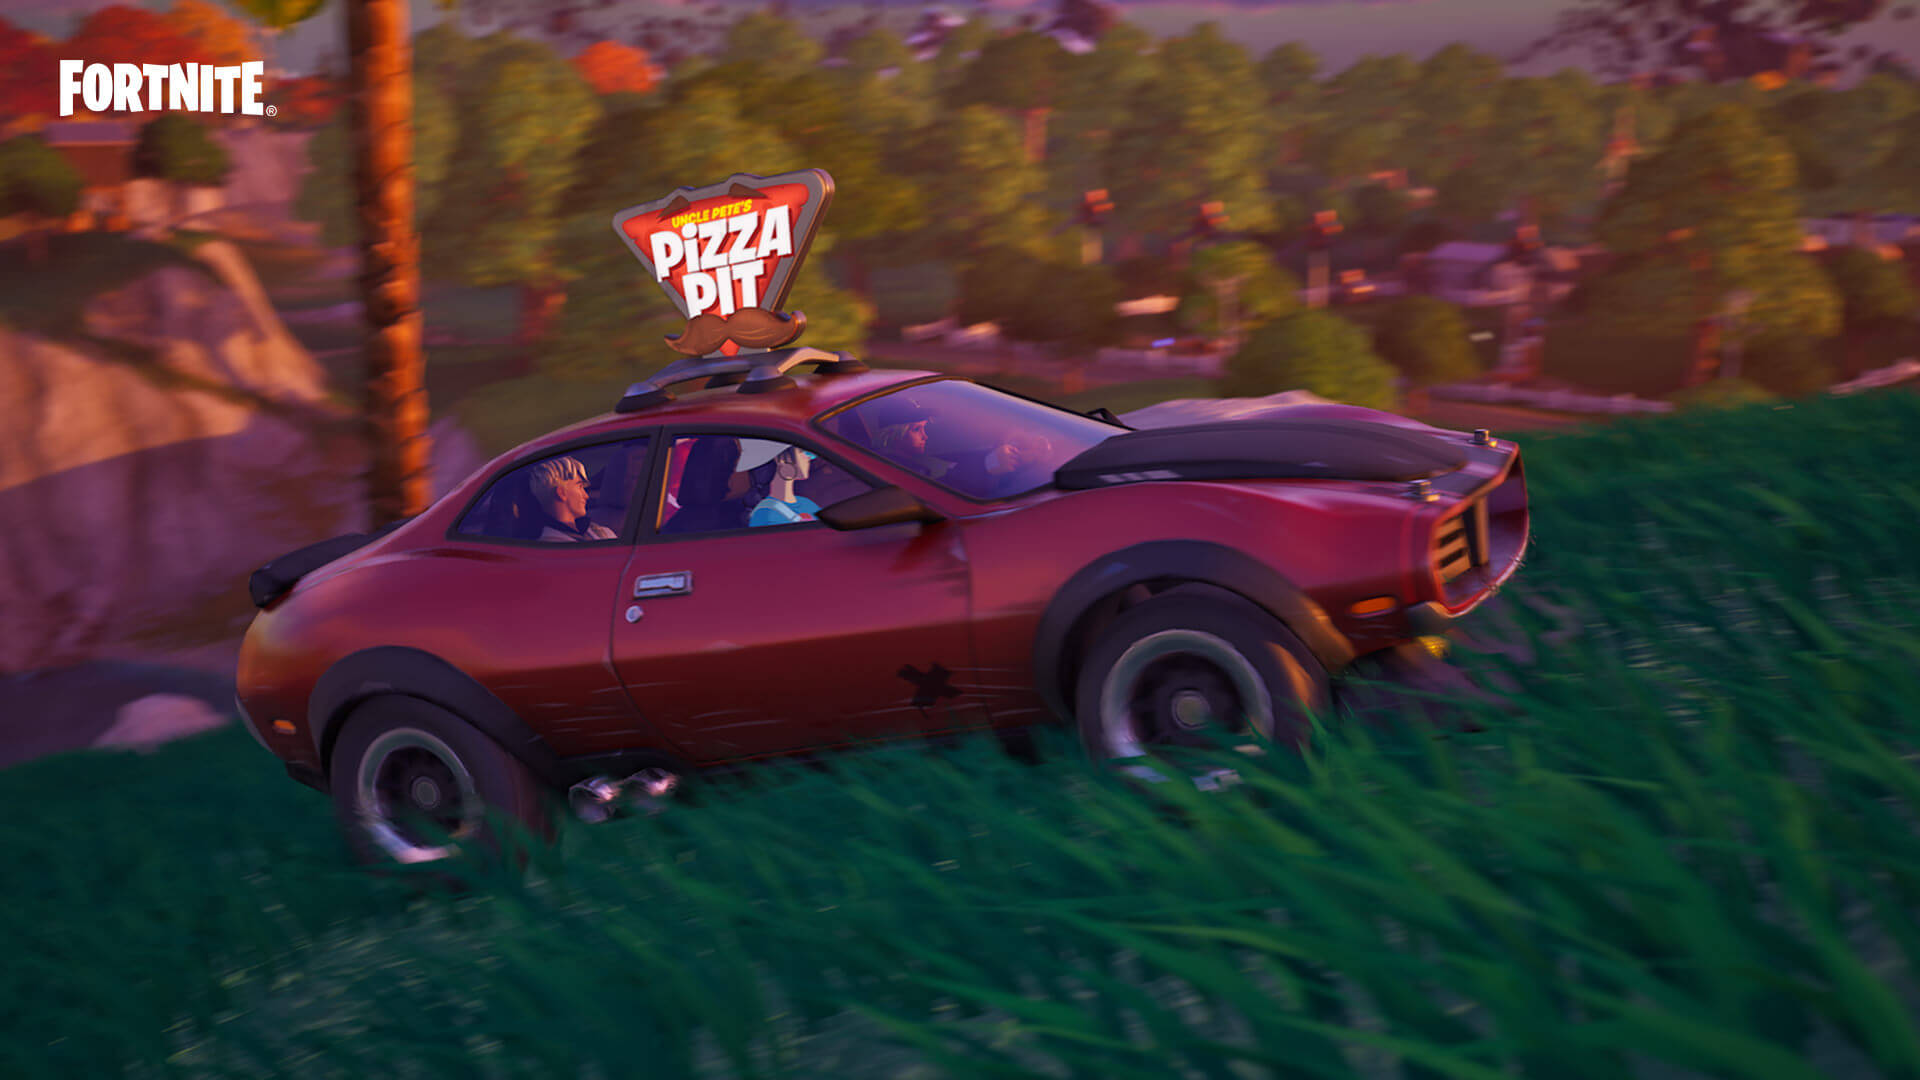 Fortnite Pizza Pit car